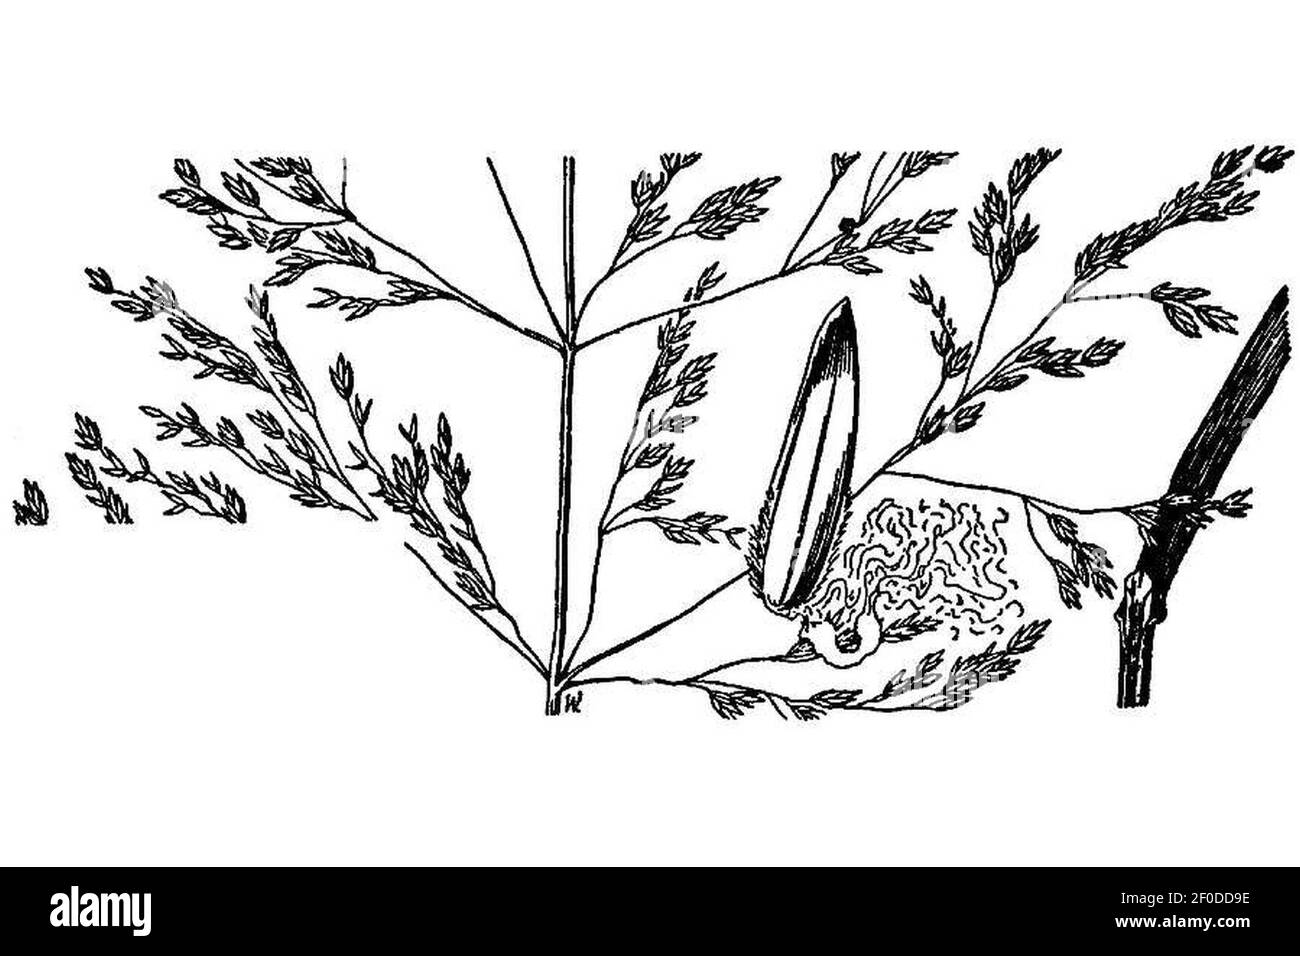 Poa palustris popa2 002 lhd. Stock Photo